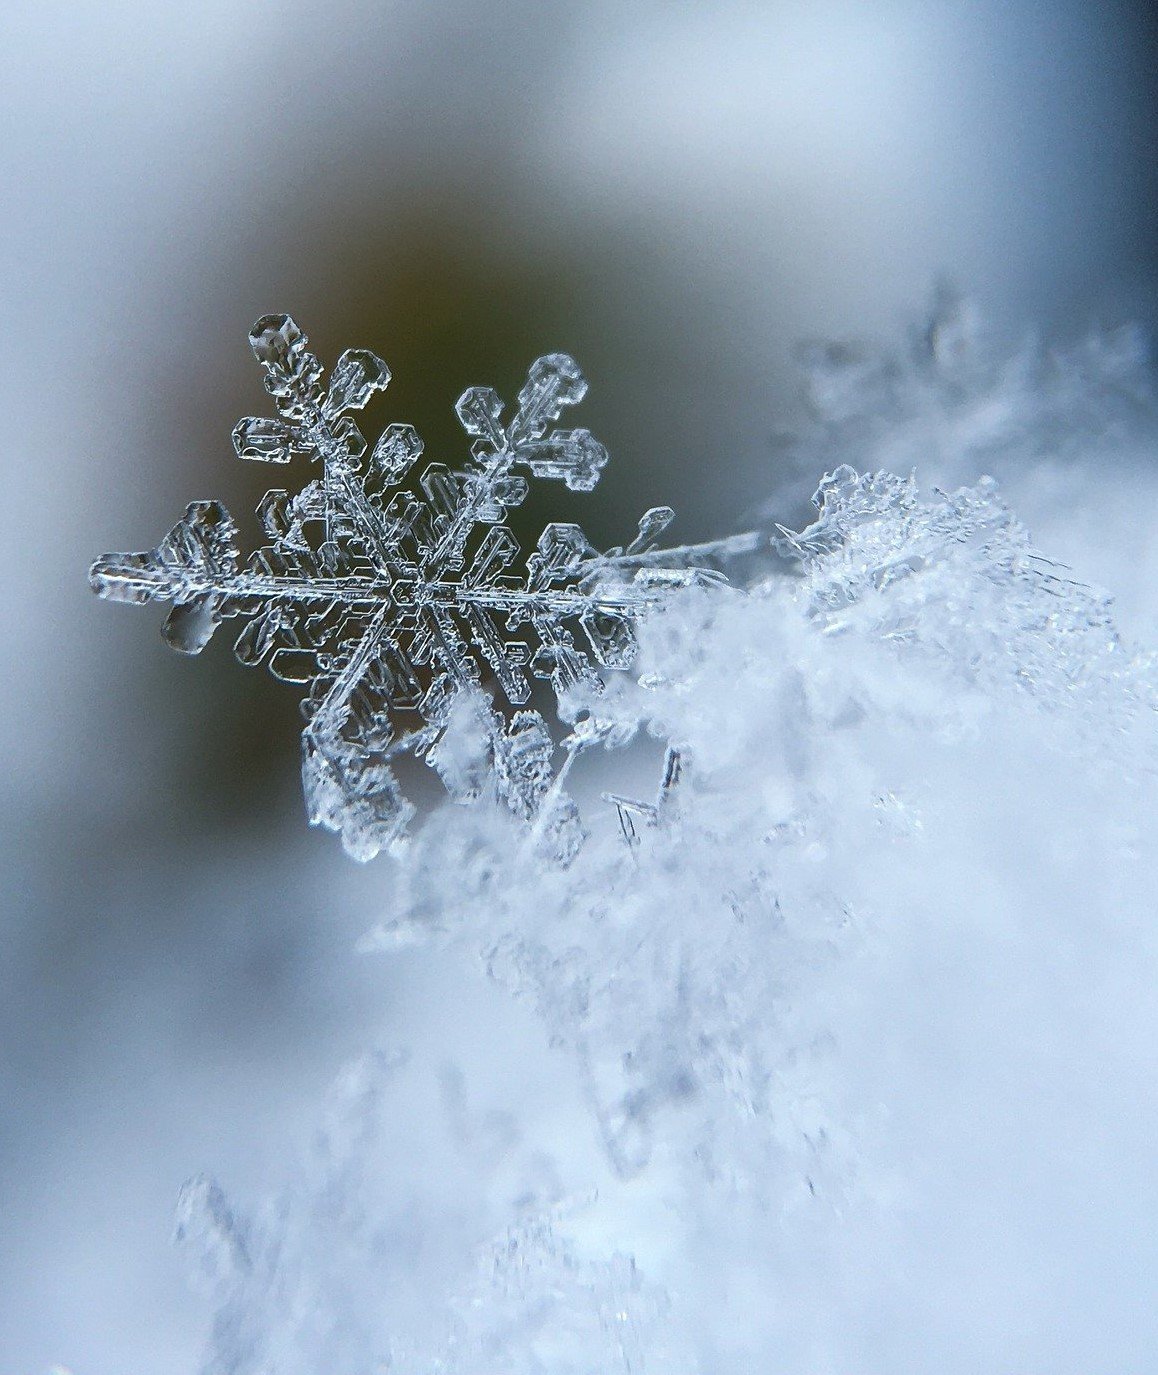 snowflake-1245748_1920 (c) pixabay